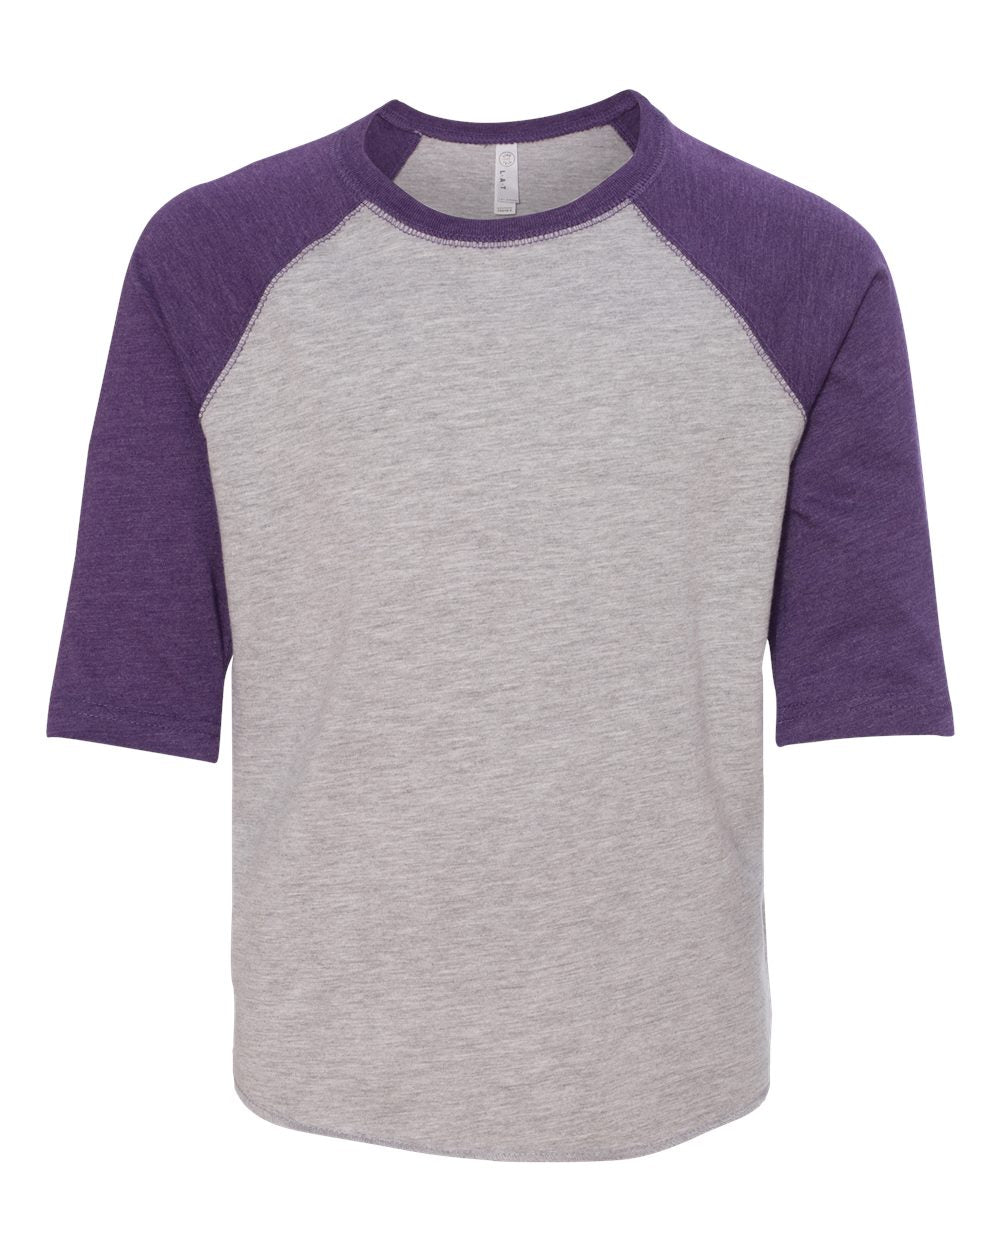 rabbit skins toddler baseball jersey tee vintage heather grey vintage purple